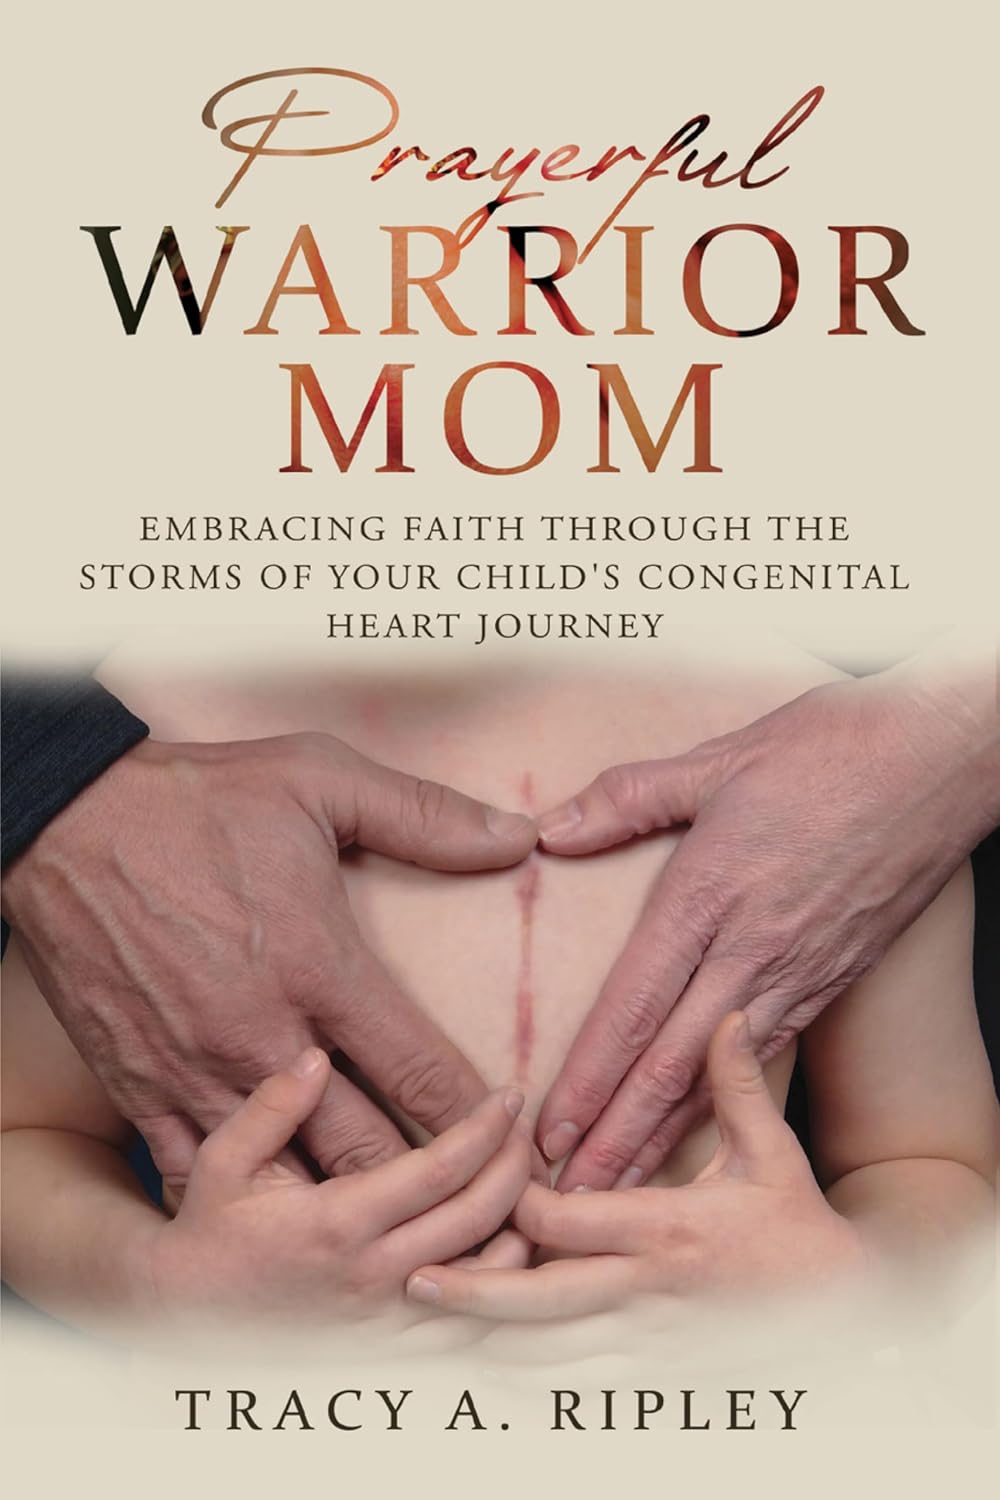 Tracy A. Ripley Releases New Inspirational Memoir - Prayerful Warrior Mom